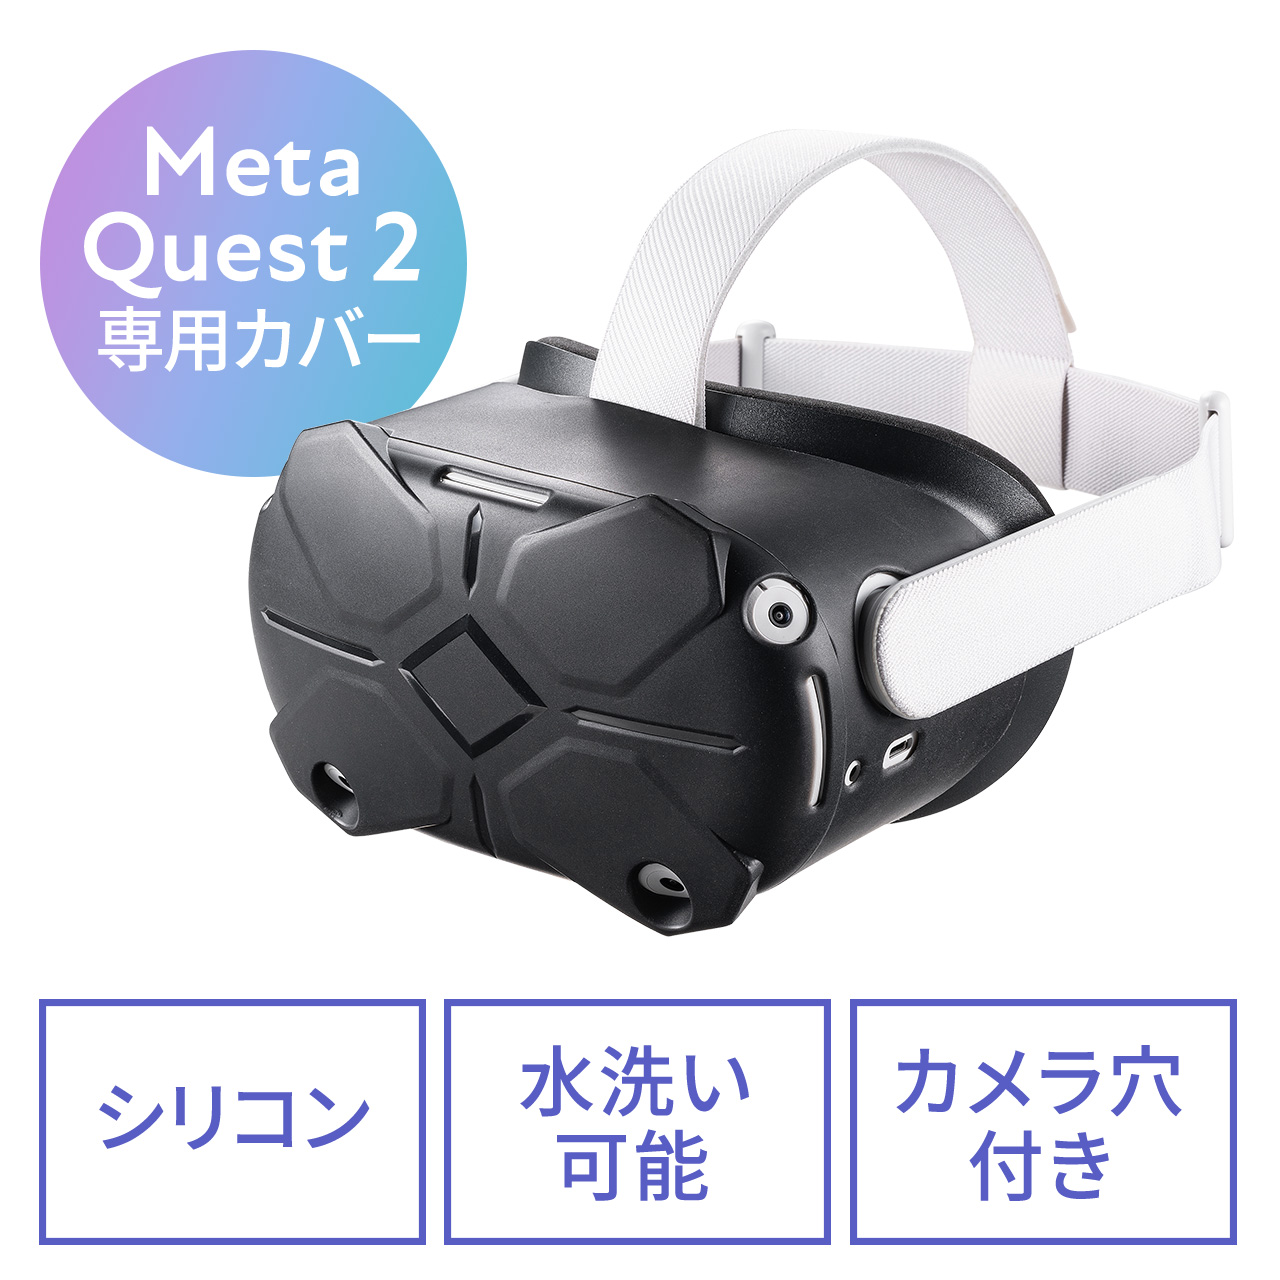 Meta Quest 2 Oculus Quest 2 用シェルカバー シリコン 簡単装着シェルカバー シリコン 簡単装着 400-MEDIQ2C001